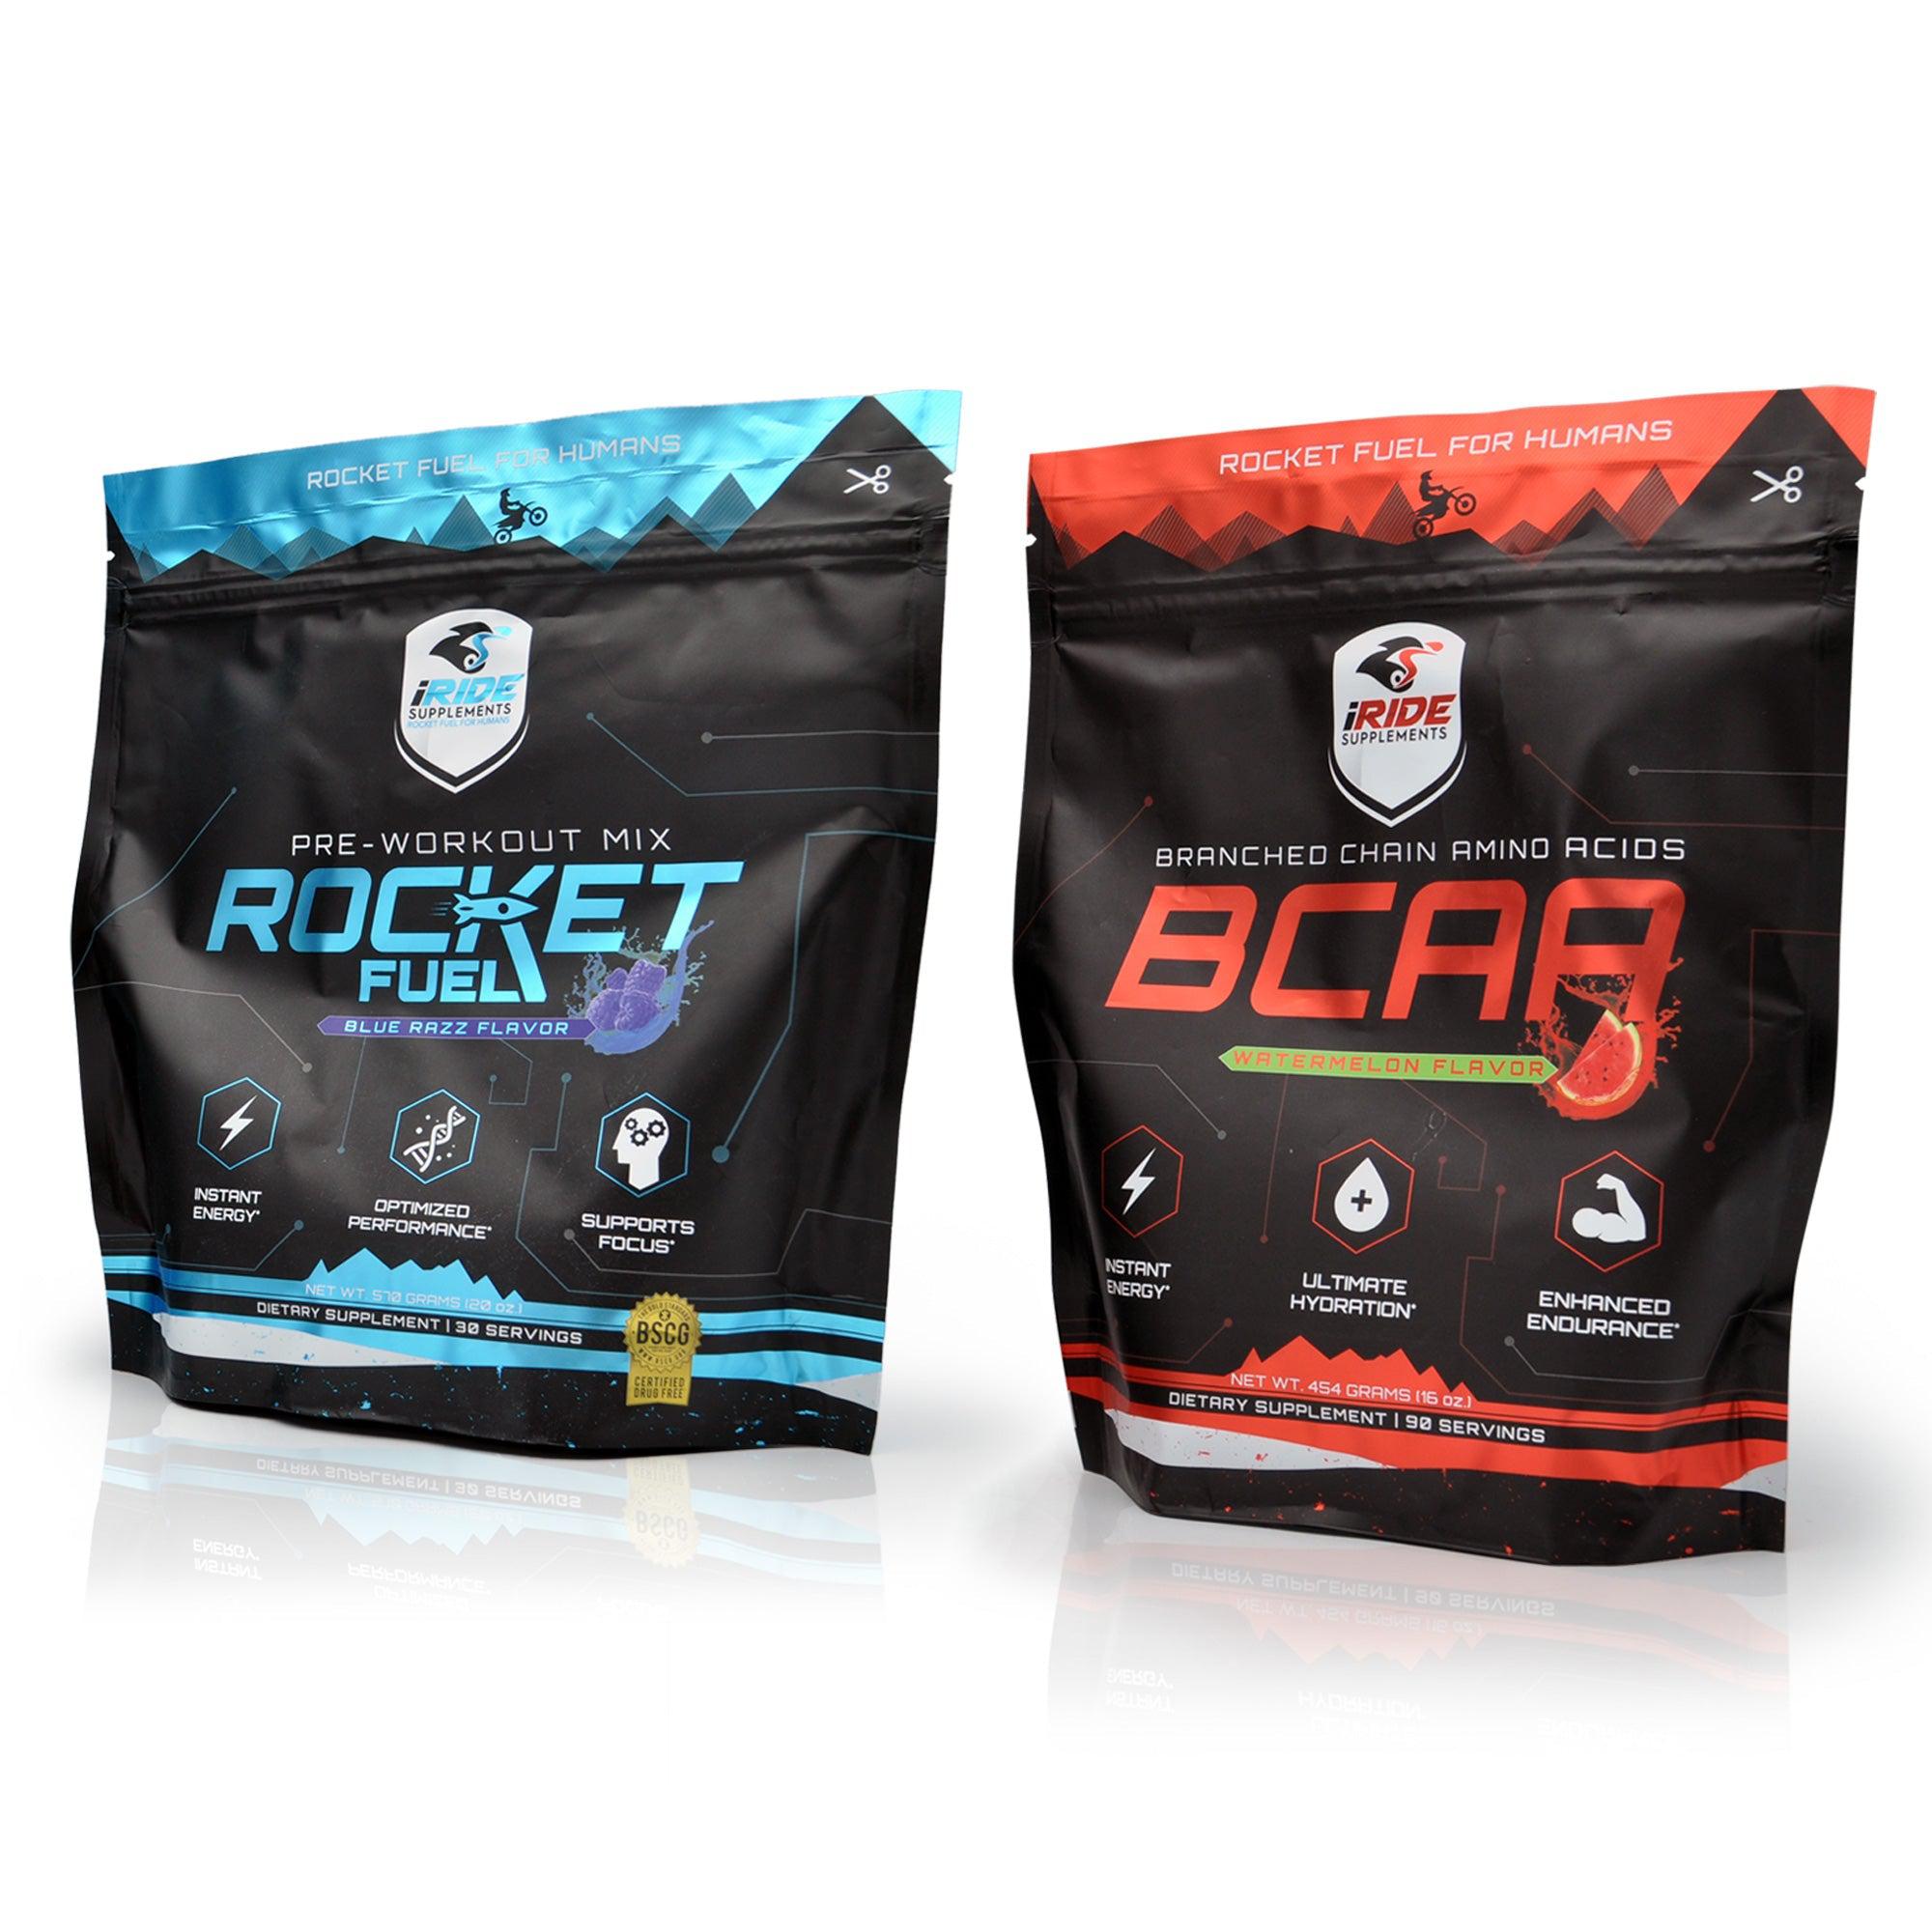 iRide Energy & Endurance Bundle featuring Rocket Fuel and BCAA powder drink mixes